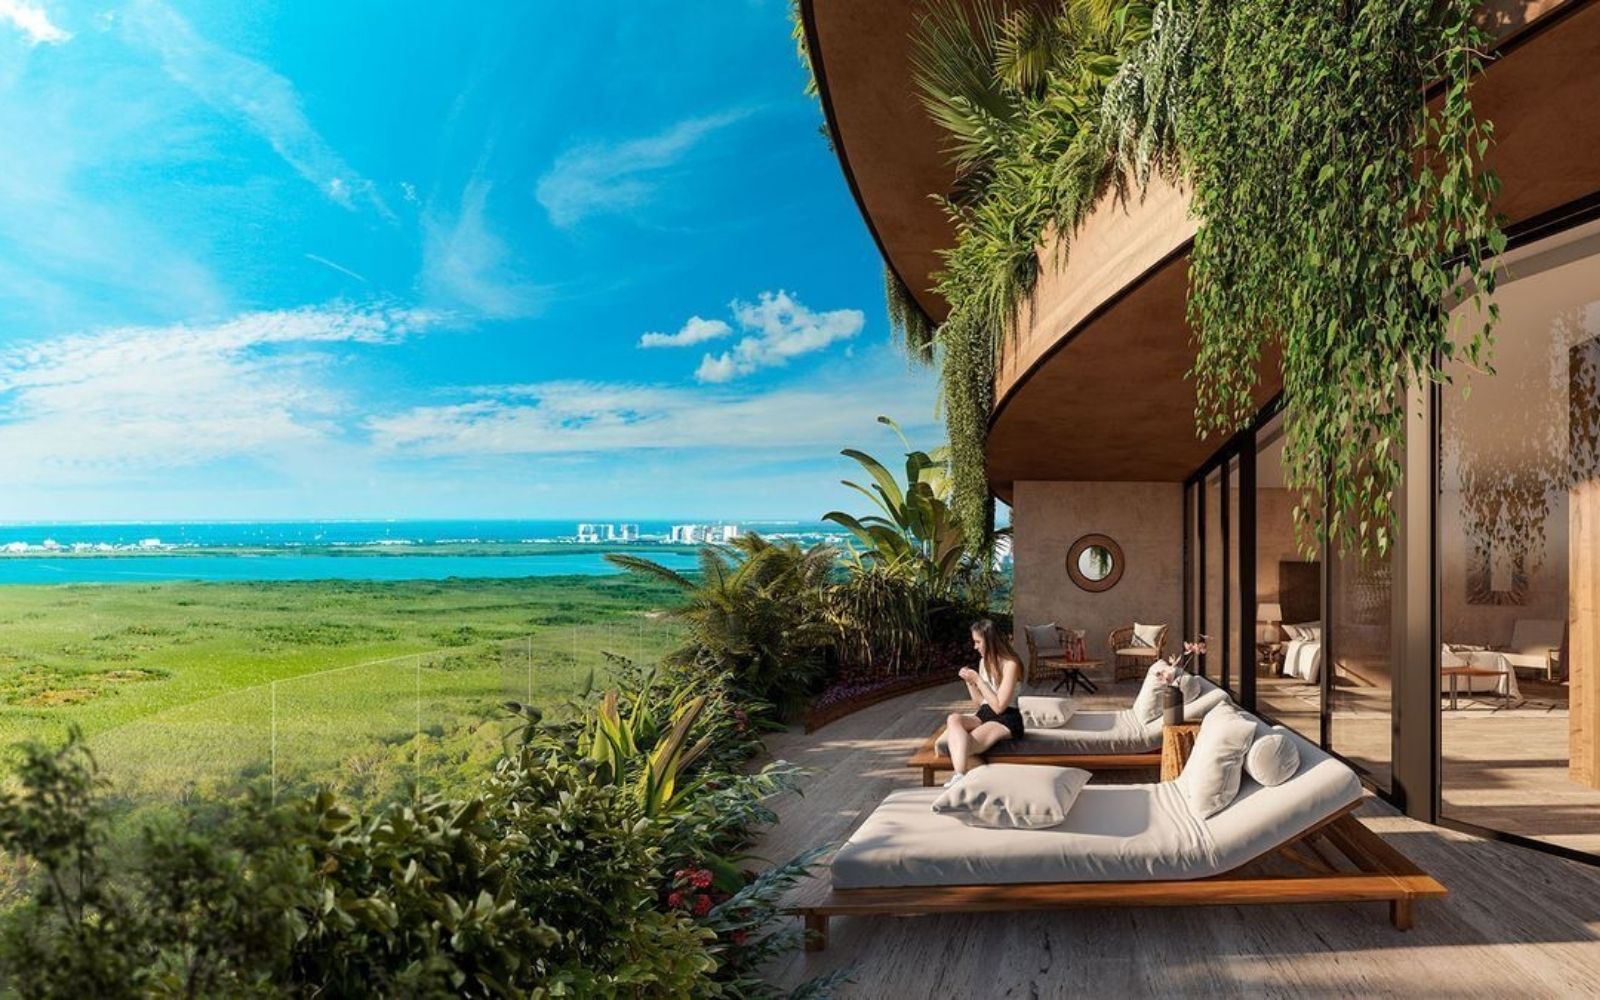 Beachfront condominium with private jacuzzi facing the ocean in Lahia Cancun